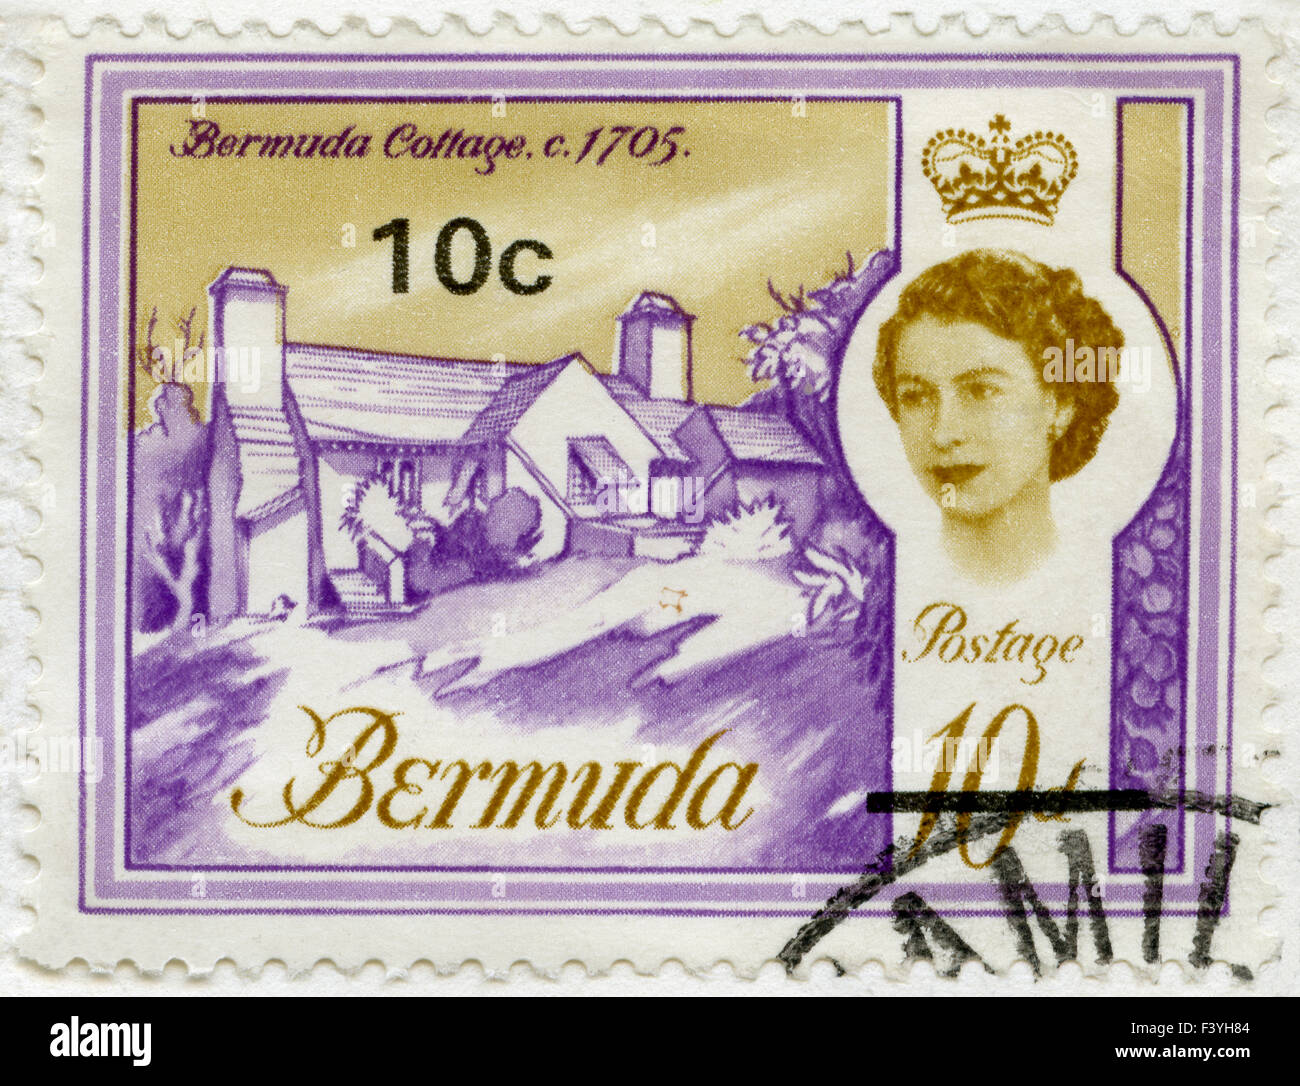 BERMUDA - 1962: mostra Bermuda Cottage, 1705 Foto Stock